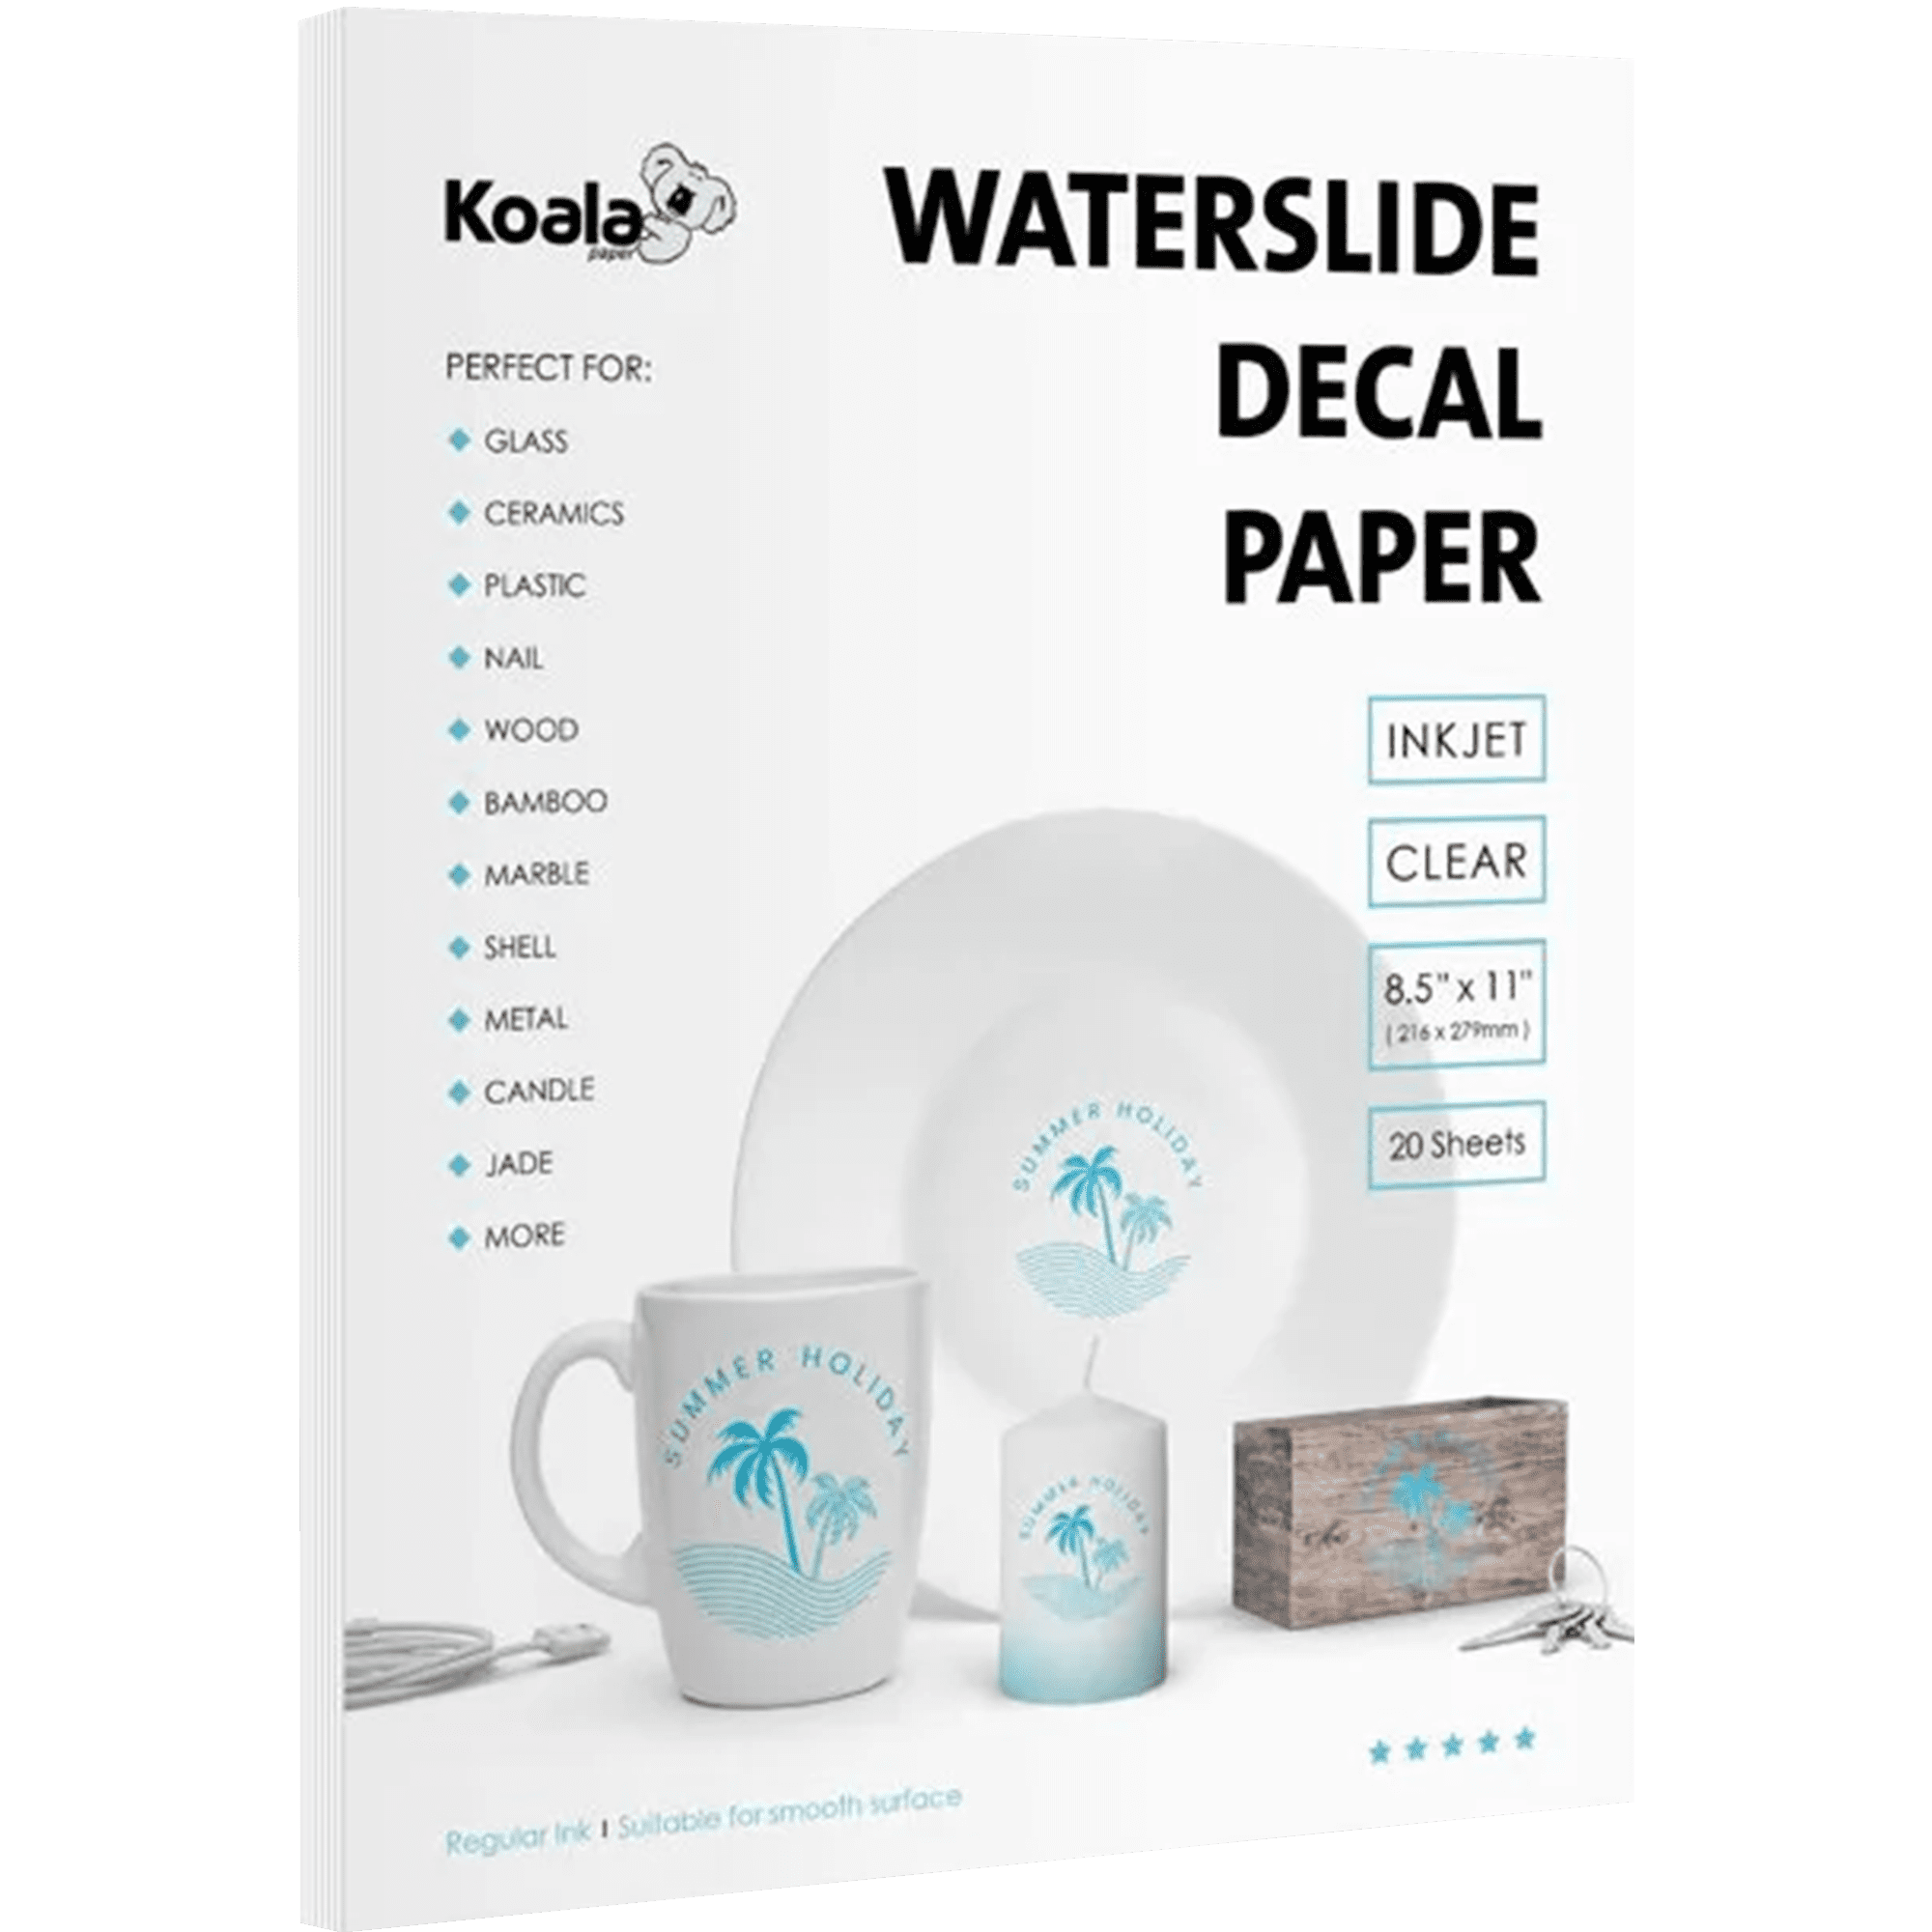 Koala No Spray Need CLEAR Waterslide Decal For INKJET Printer 20